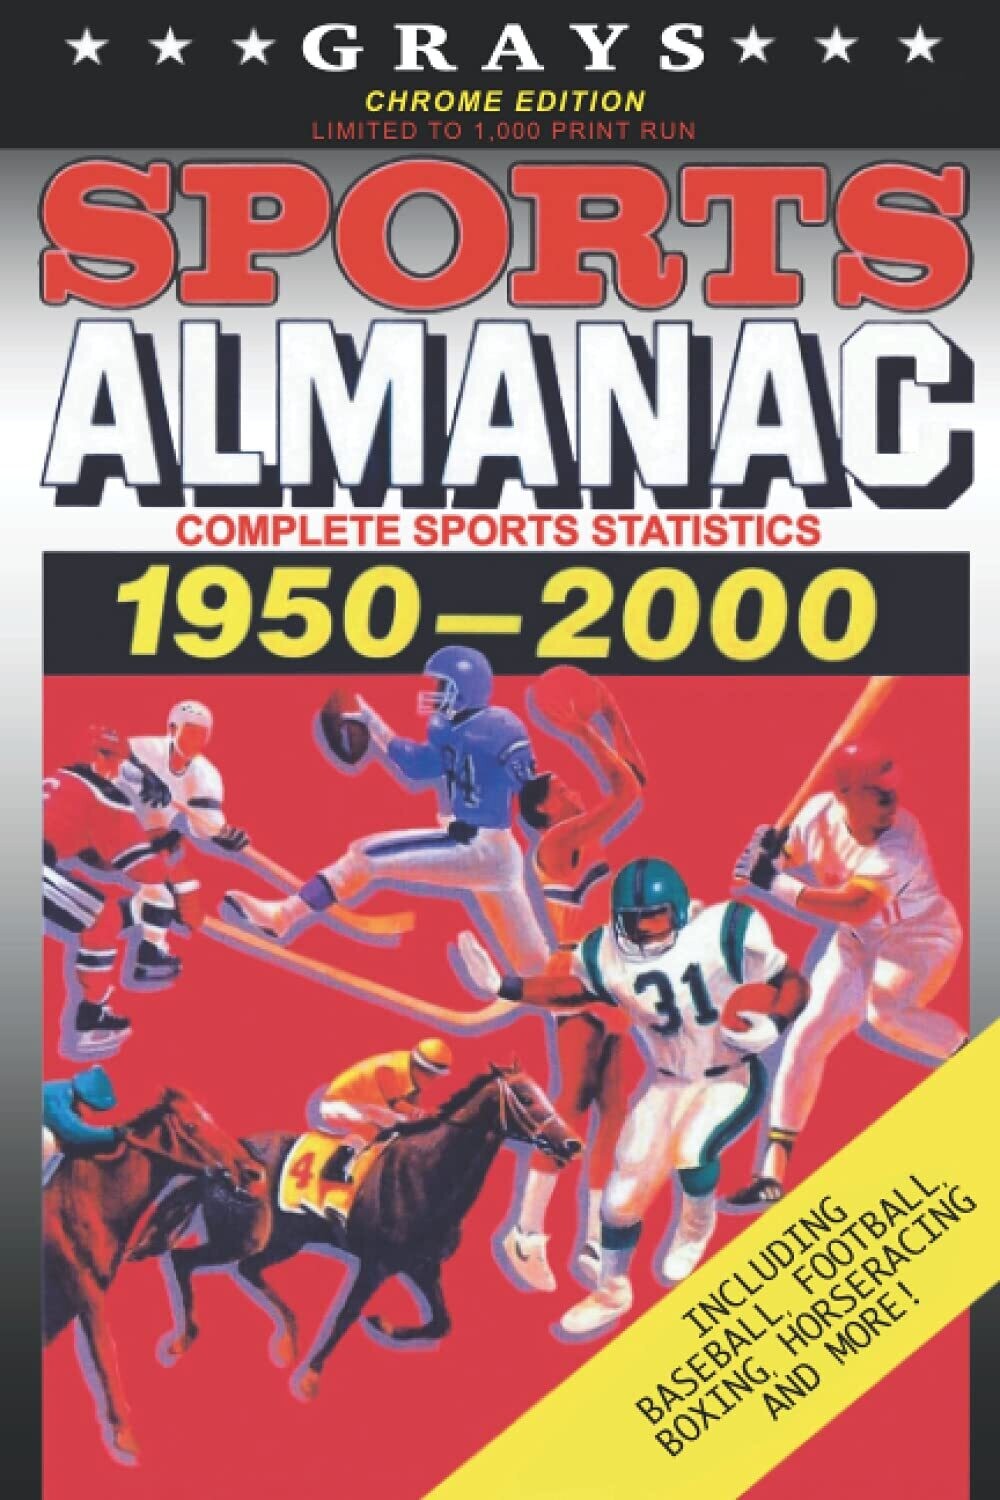 Grays Sports Almanac: Complete Sports Statistics 1950-2000 Book [Chrome Edition - LIMITED TO 1,000 PRINT RUN]